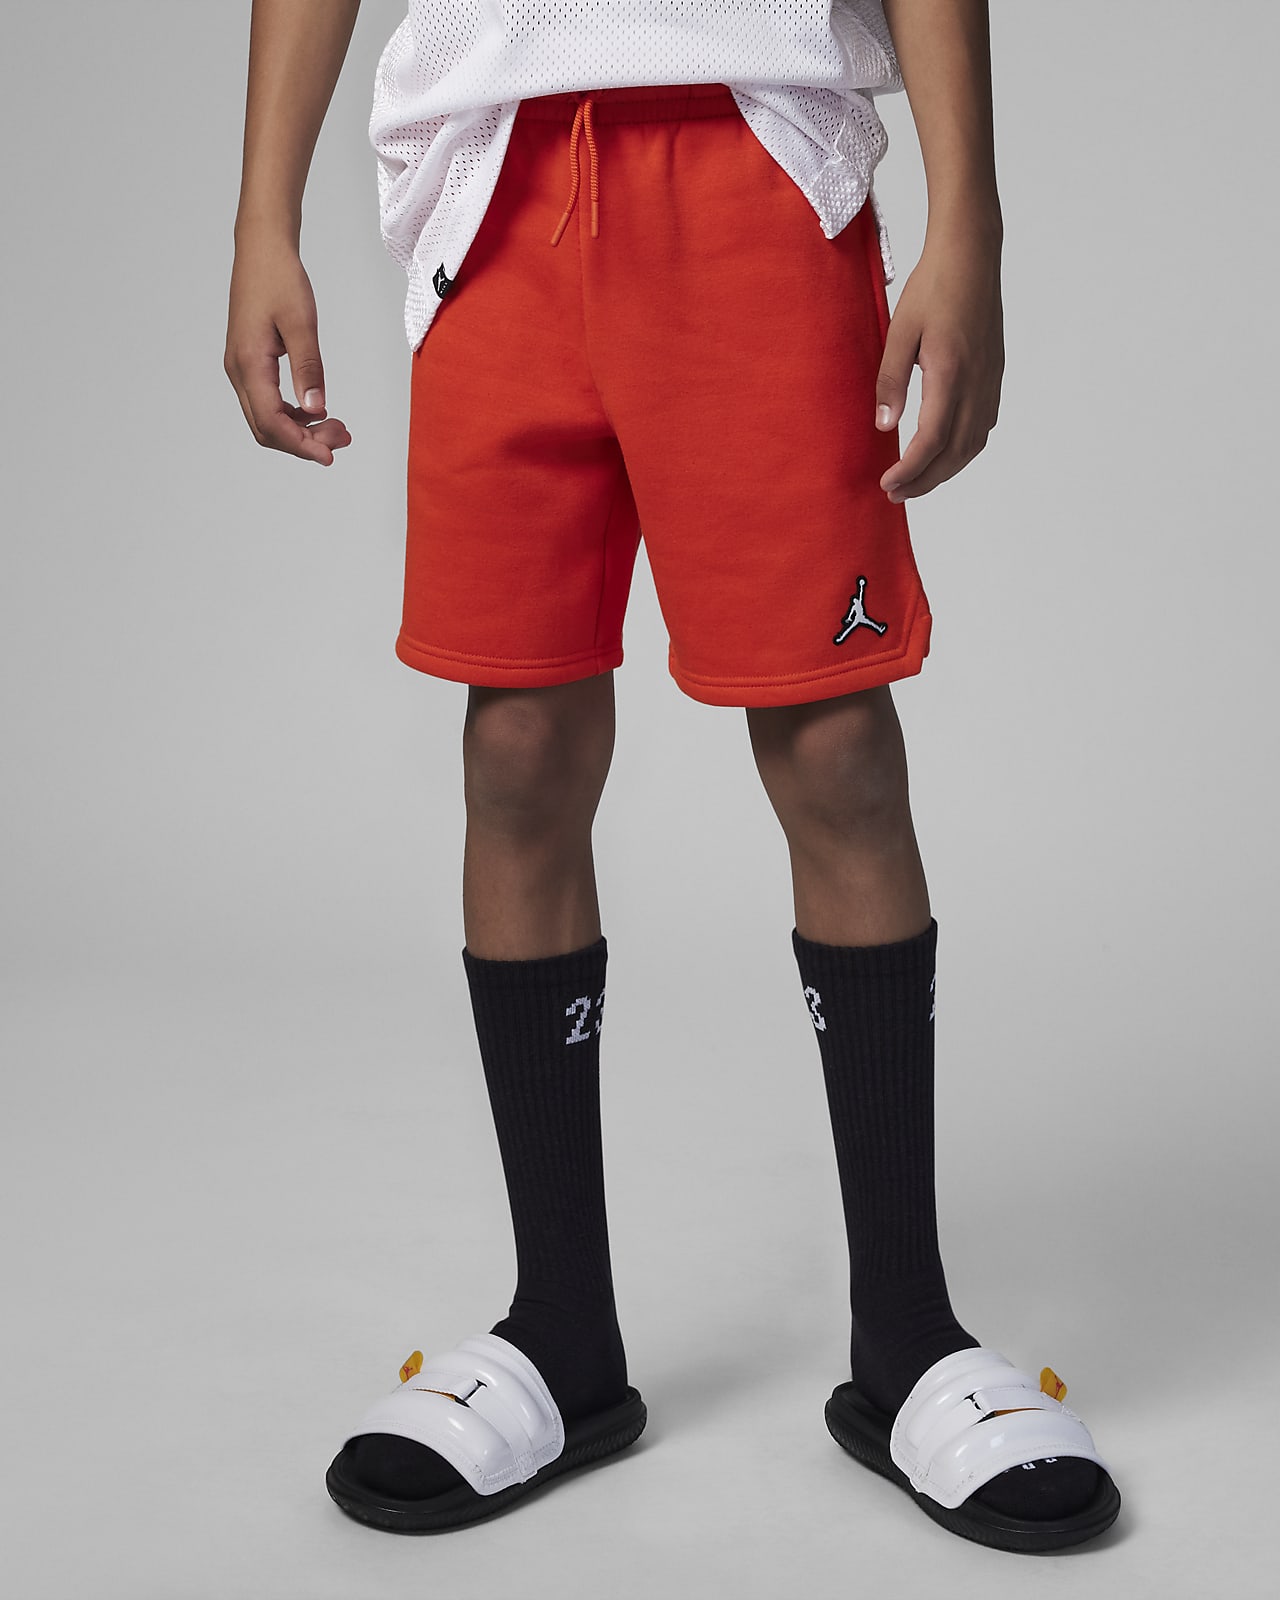 Frugal Enorme seno Shorts para niño talla grande Jordan. Nike.com